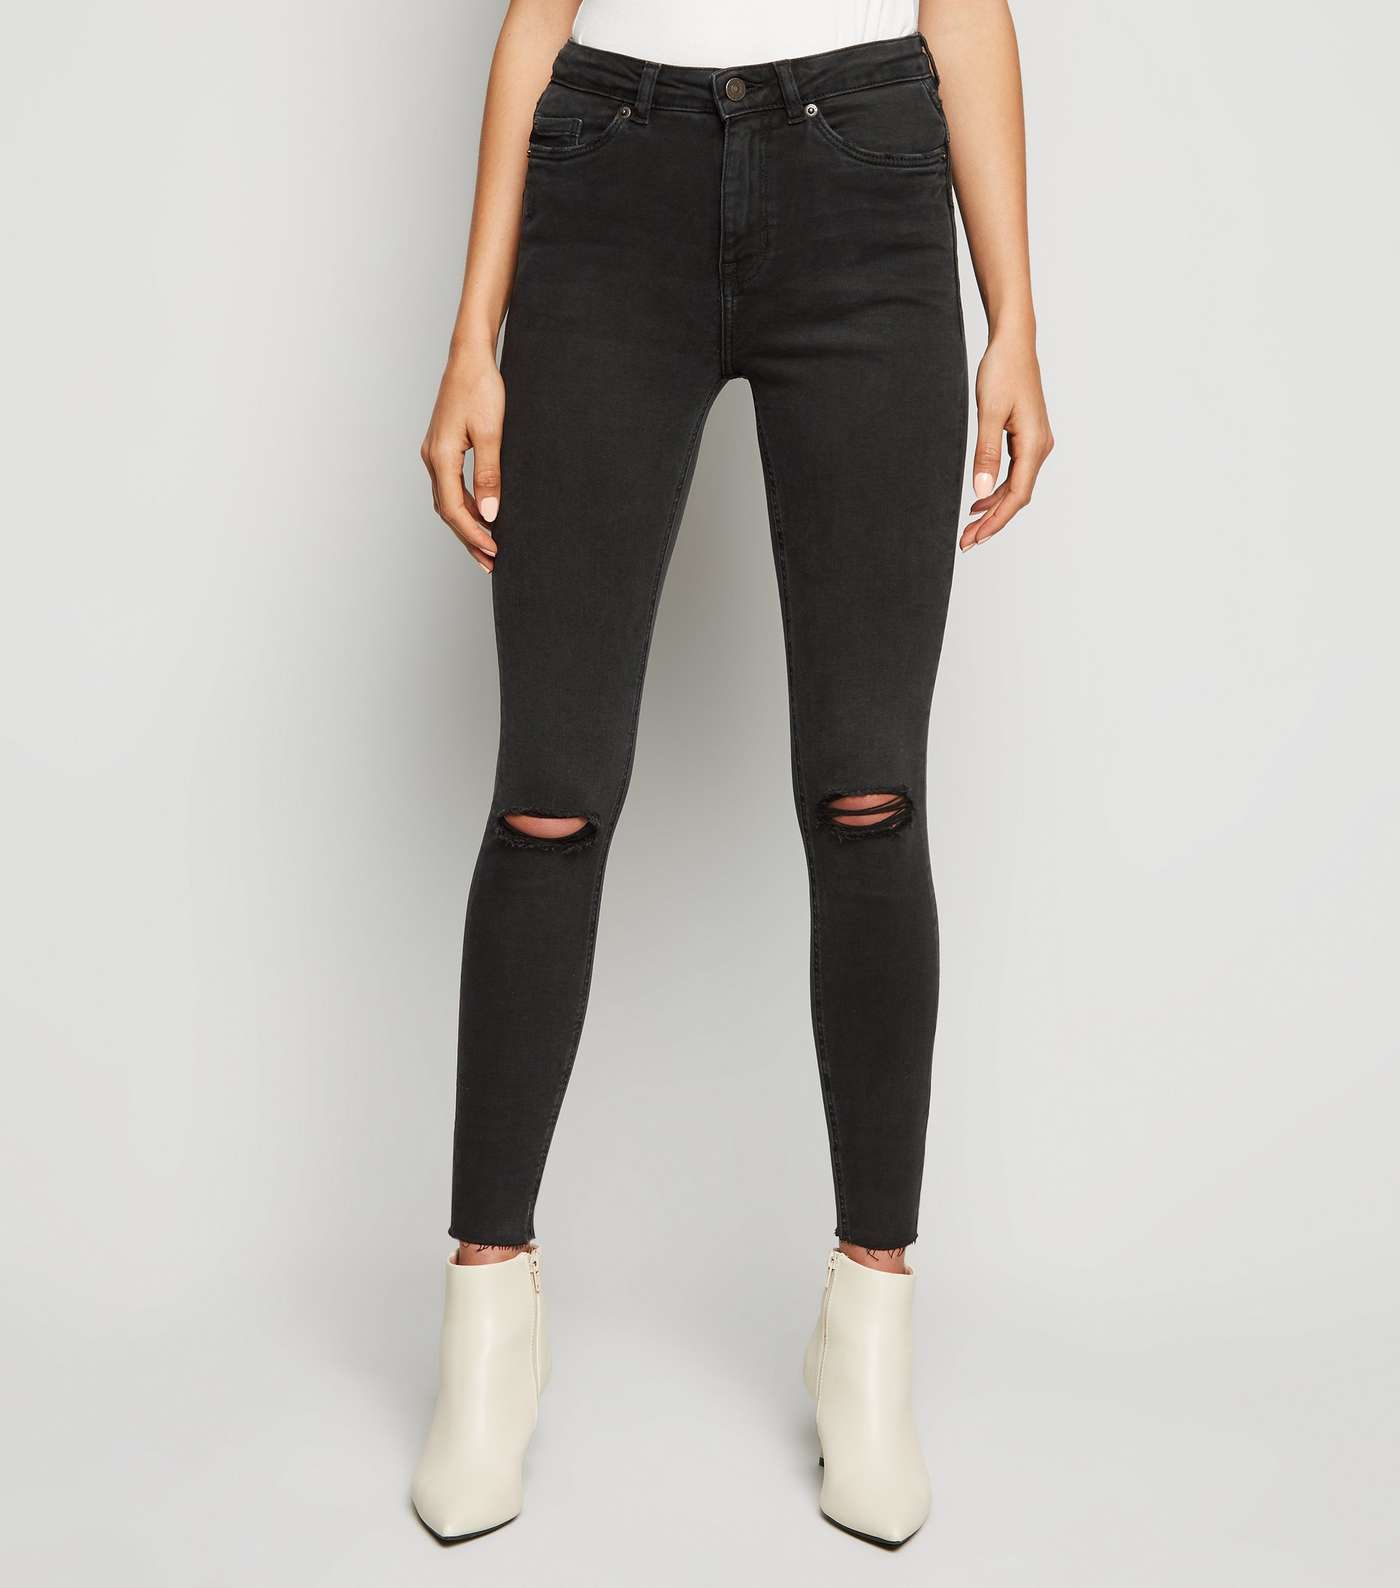 Black Lift & Shape Ripped Jenna Skinny Jeans Image 2